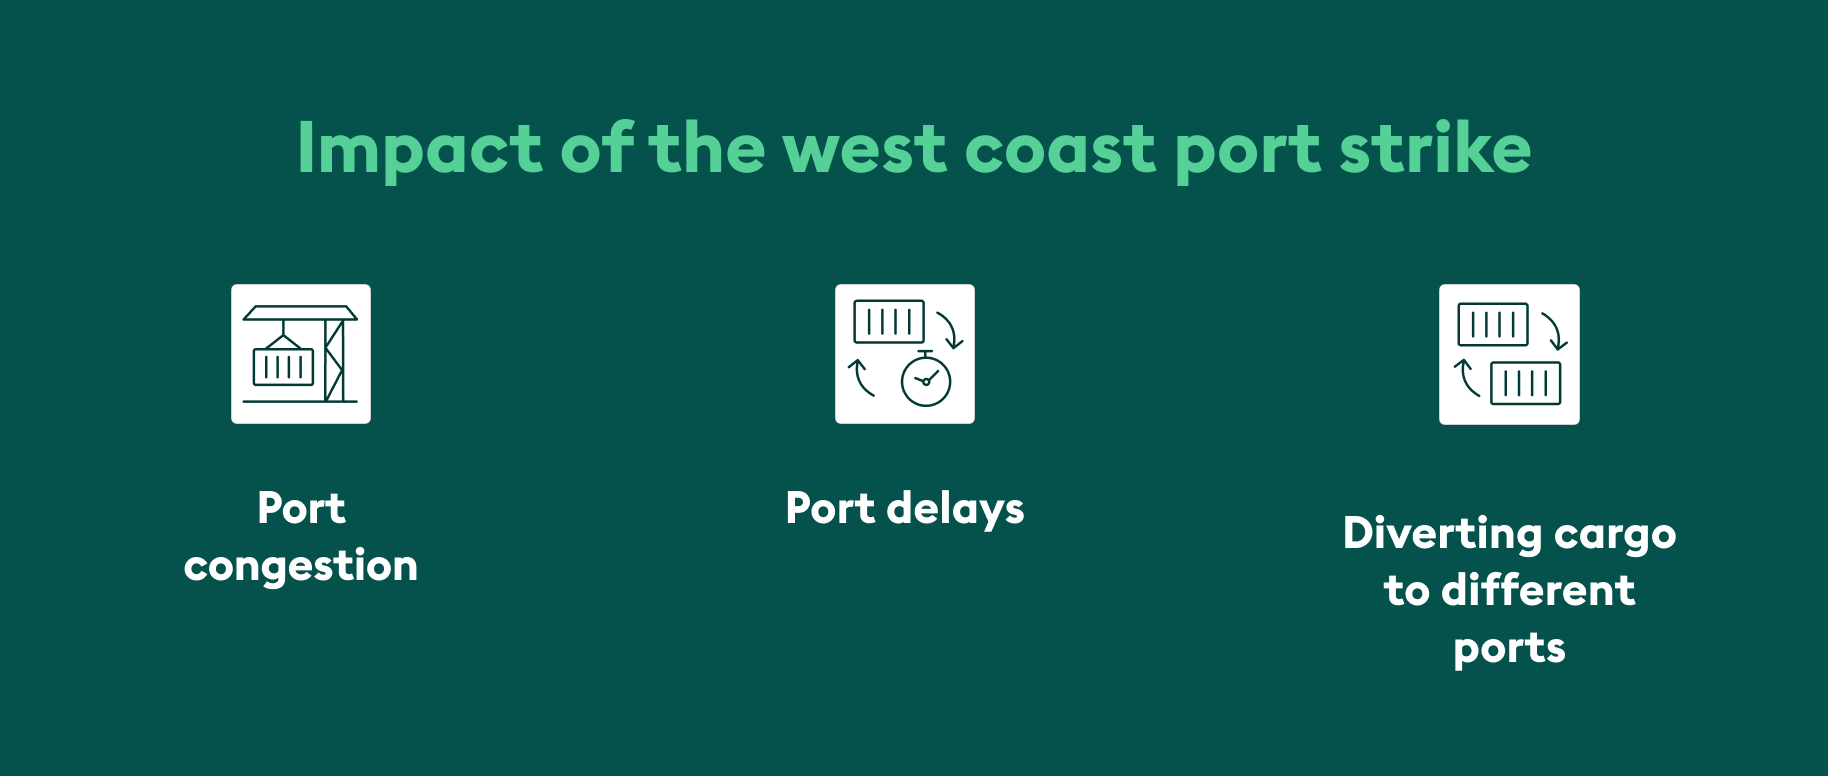 Impact of west coast port strike